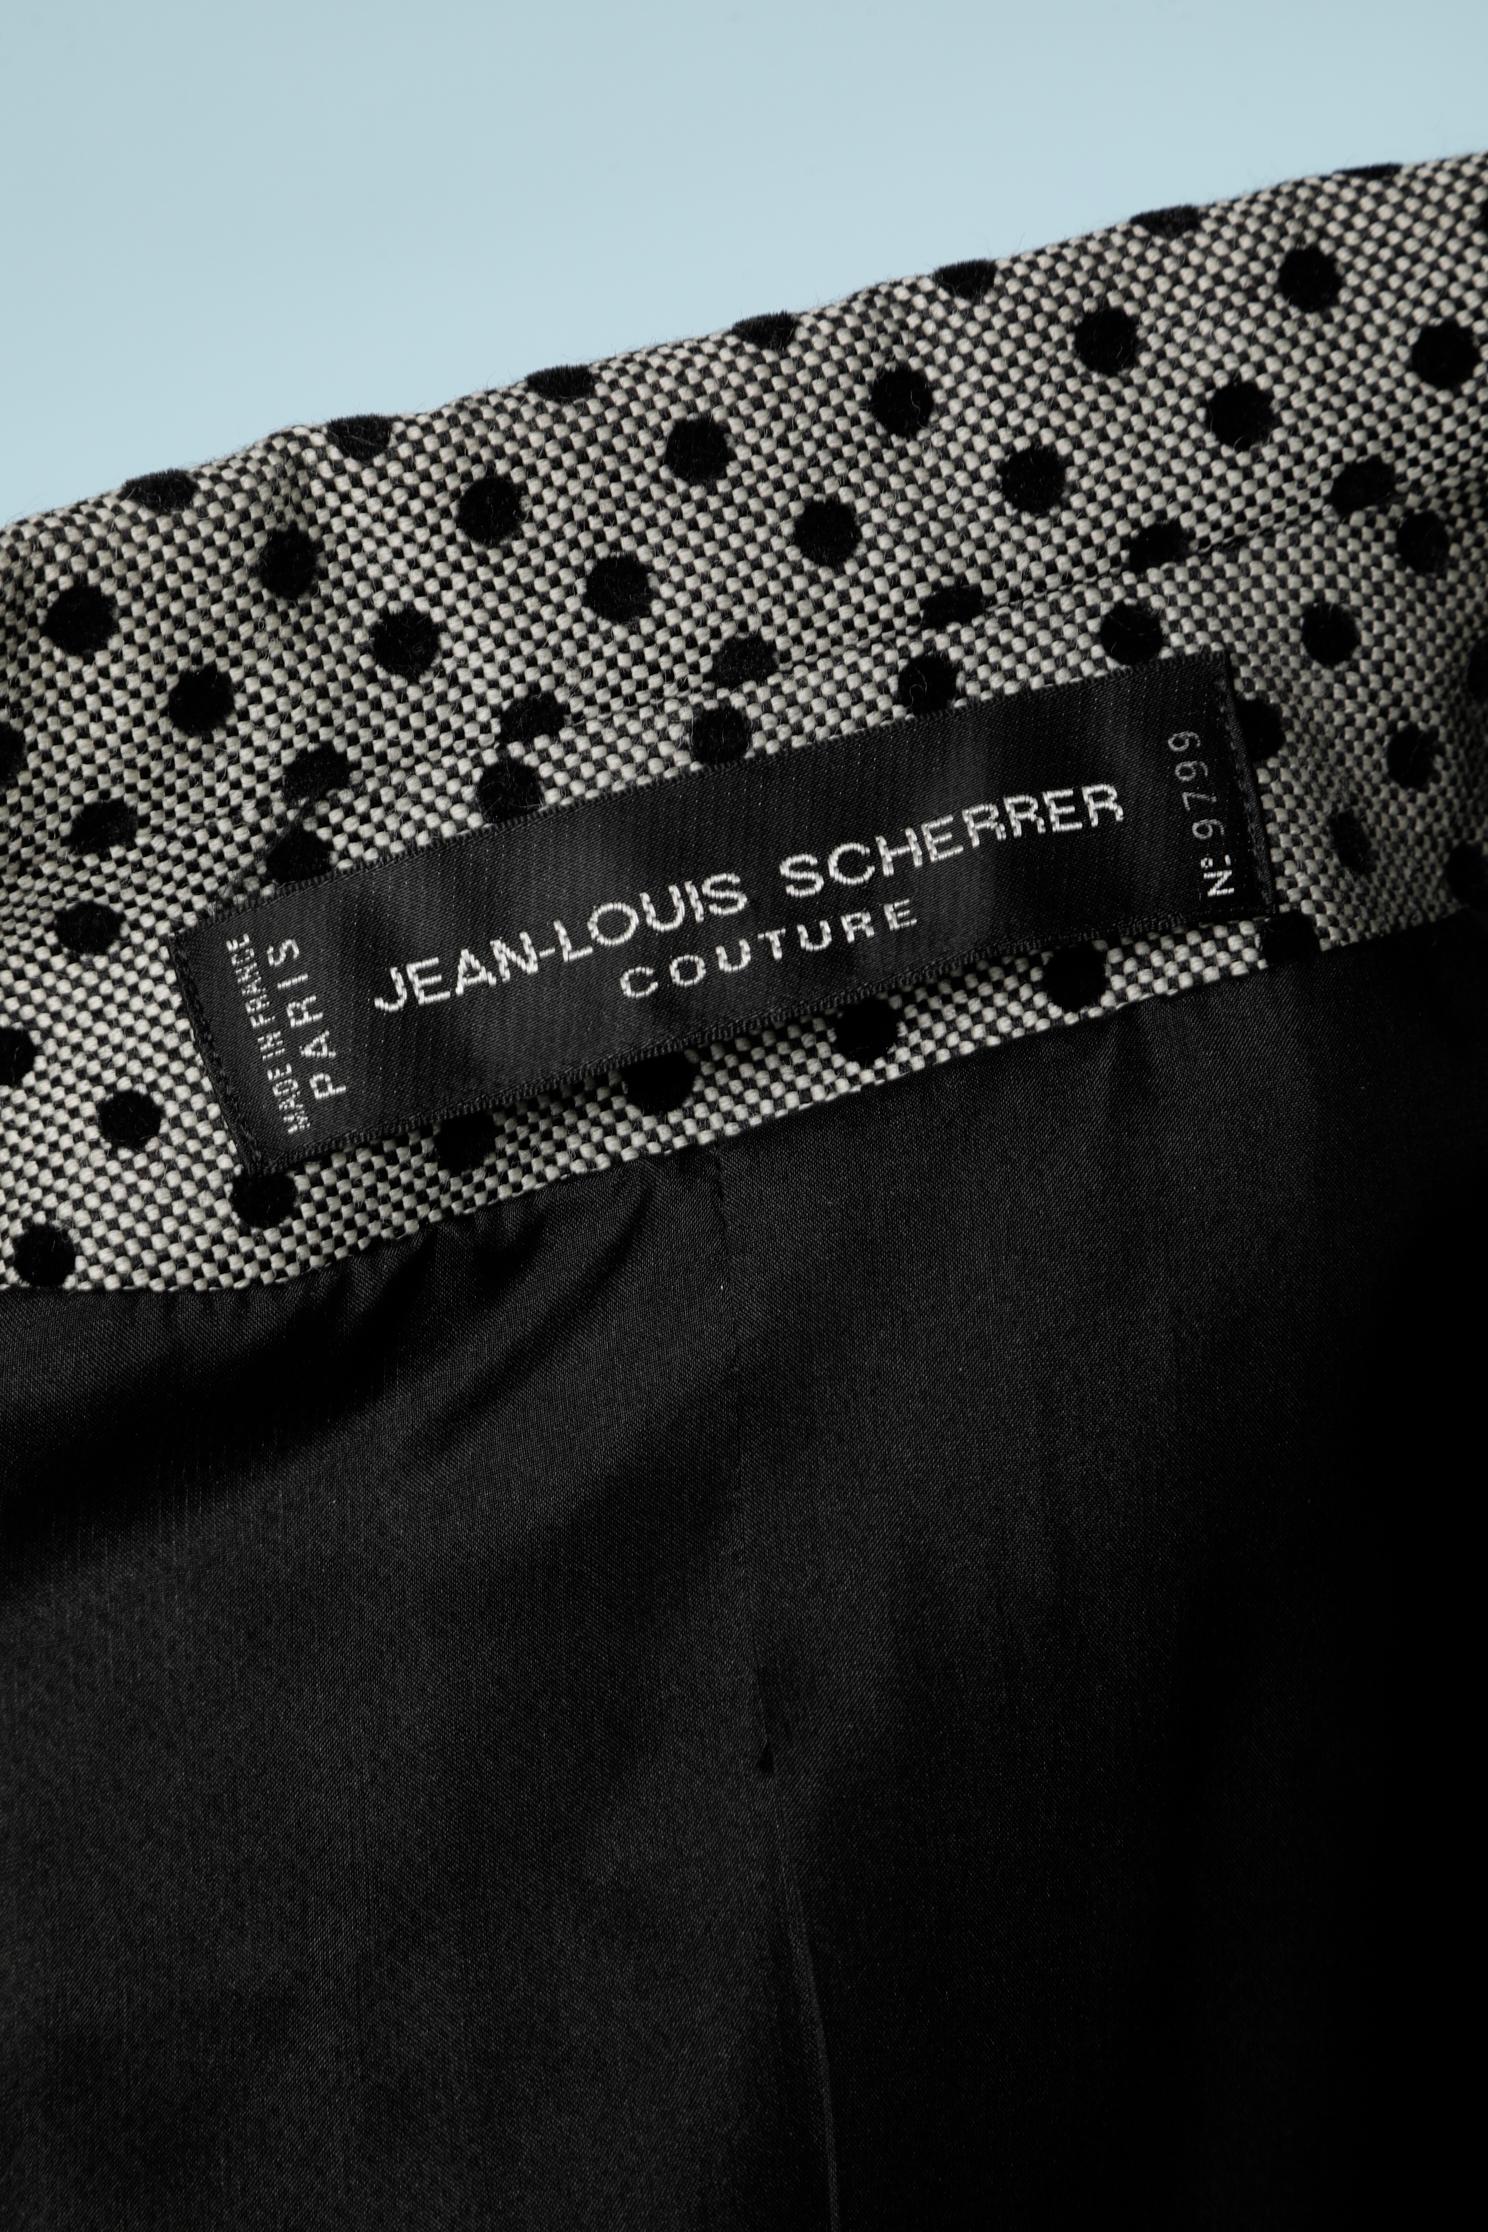 Wool skirt-suit with black velvet polka dots Jean-Louis Scherrer Couture numberd For Sale 1